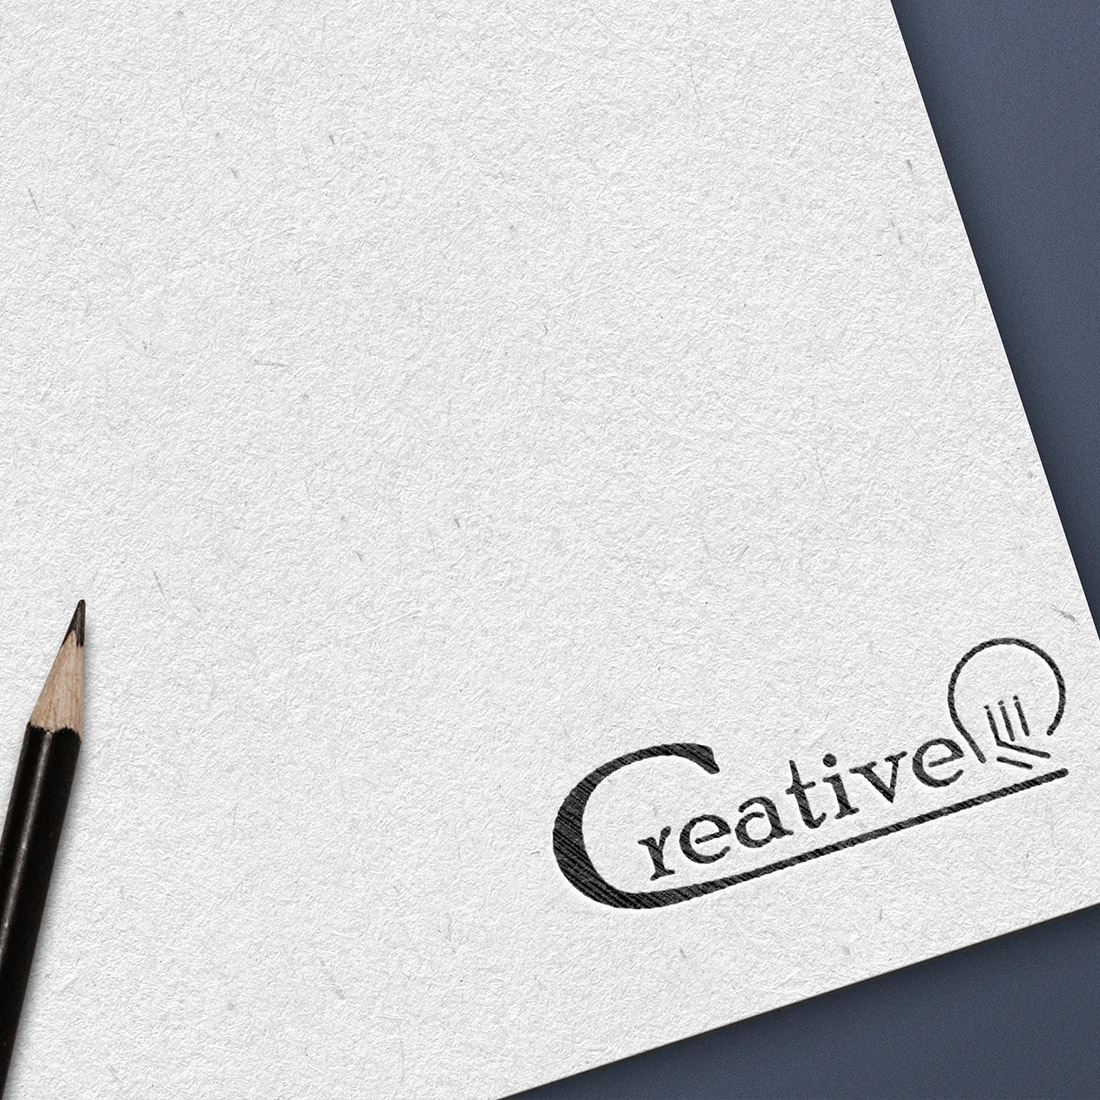 creative ctudio logo vector lamp preview image.